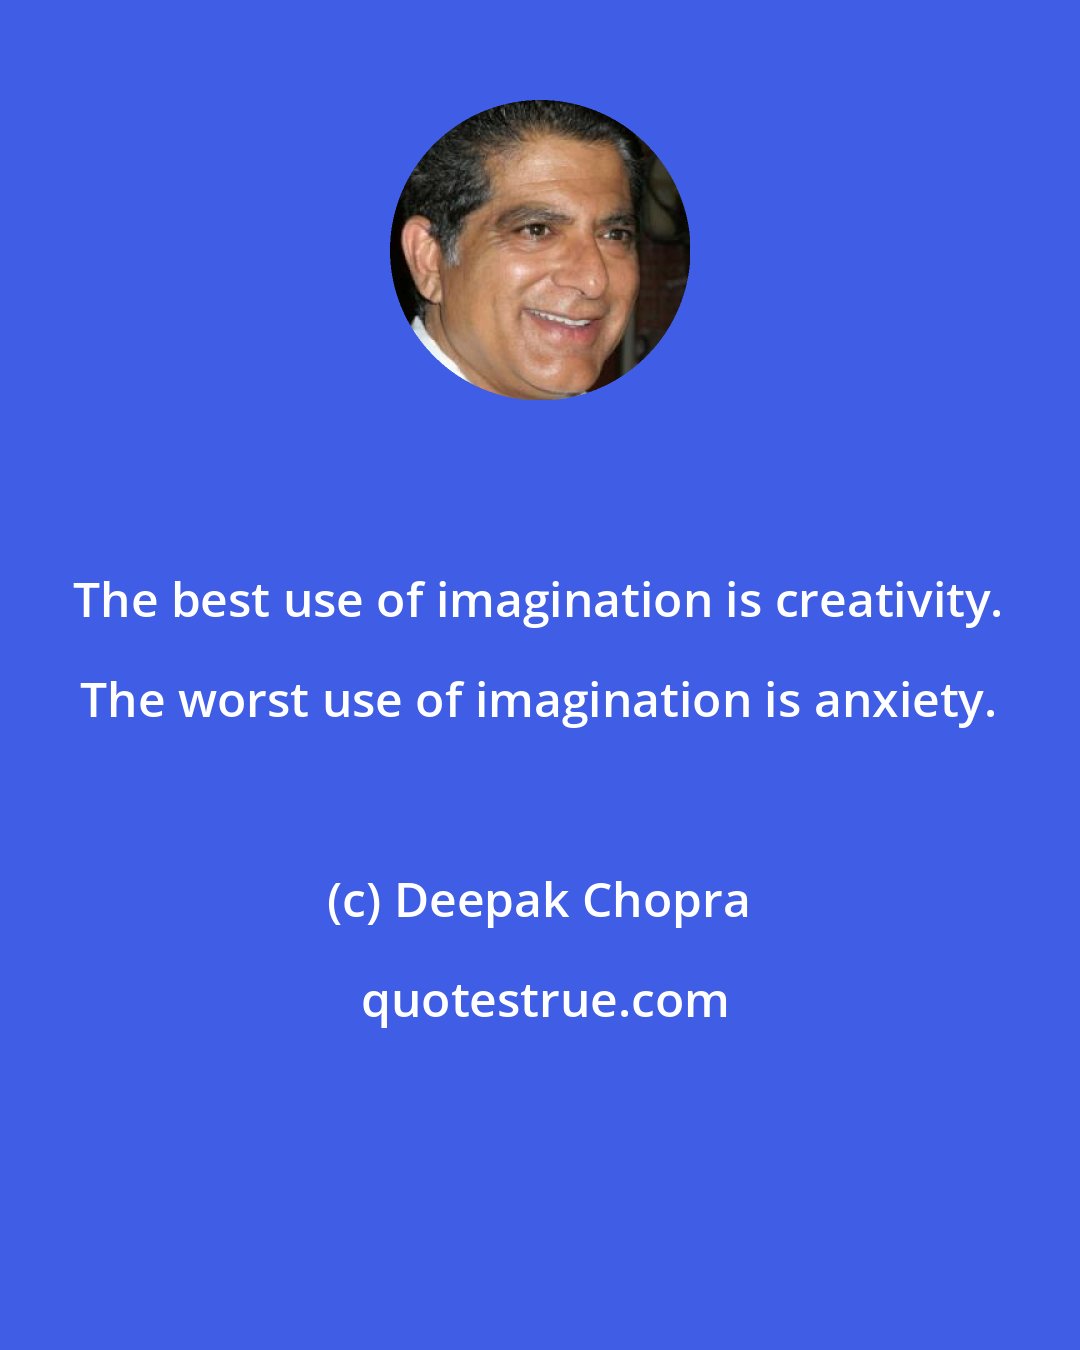 Deepak Chopra: The best use of imagination is creativity. The worst use of imagination is anxiety.